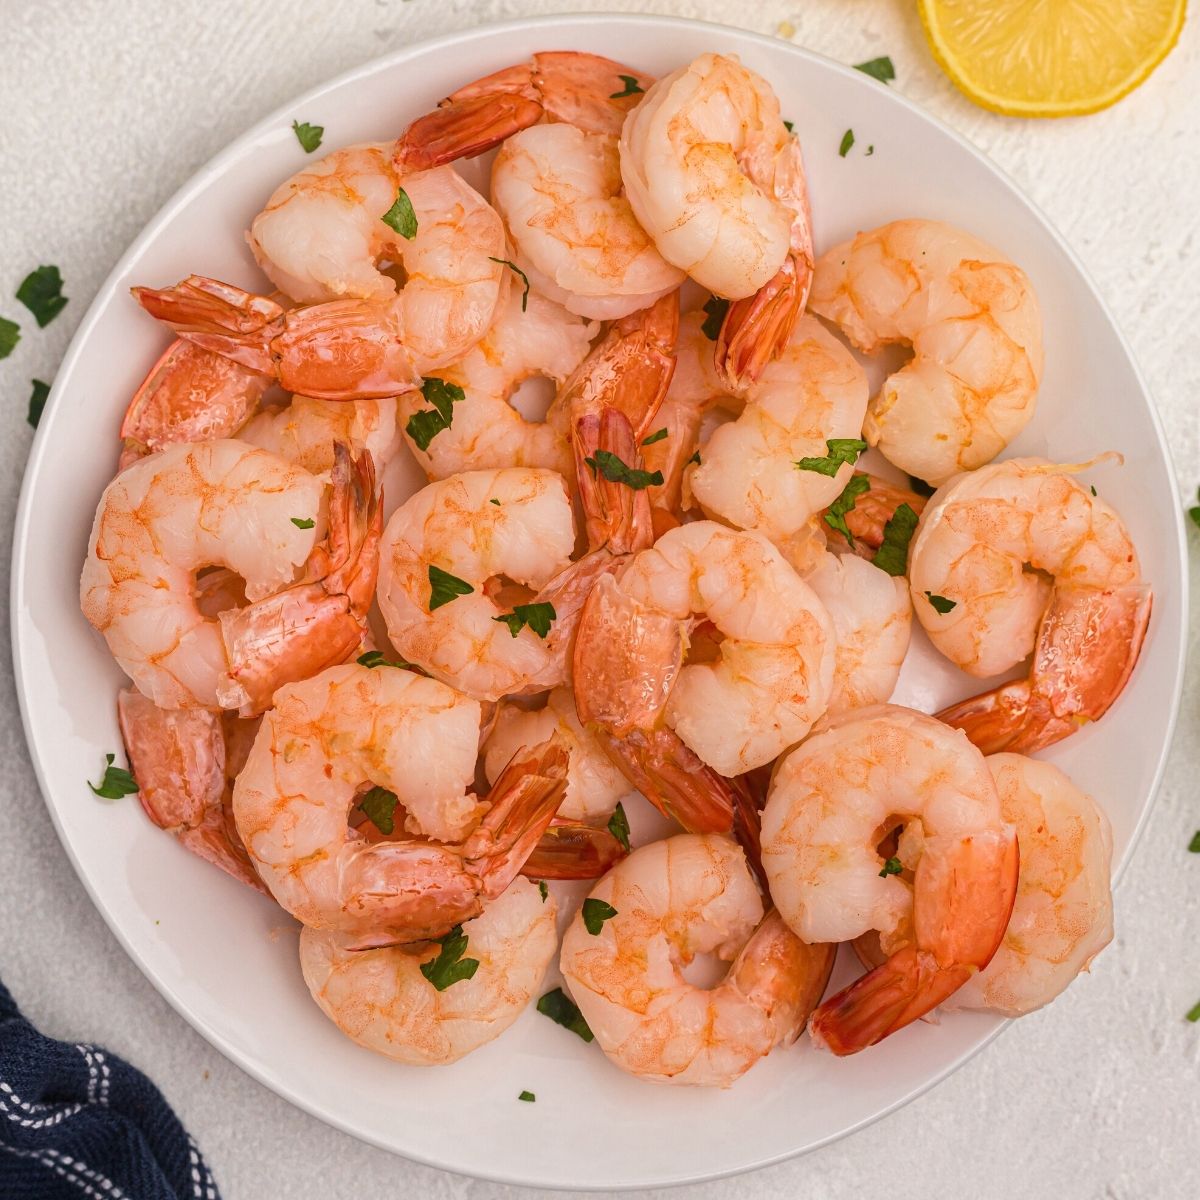 How long do you cook frozen shrimp in air fryer?